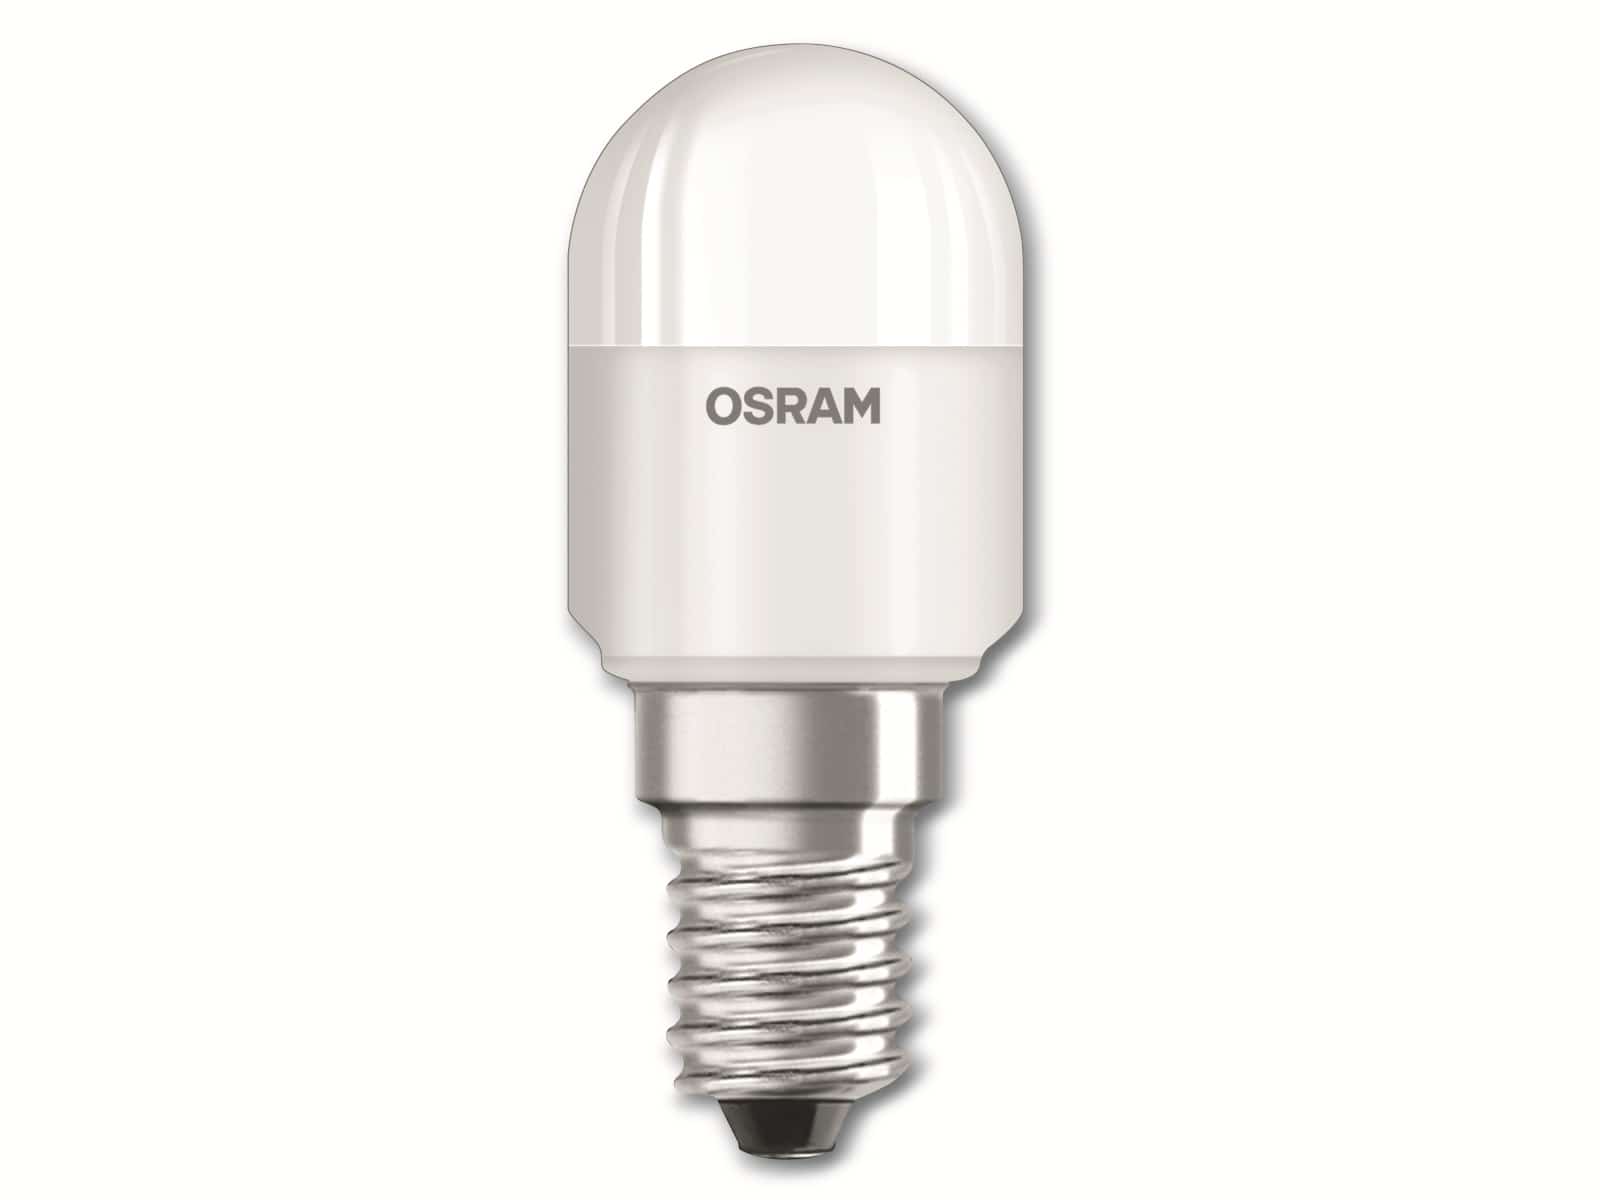 OSRAM LED-Lampe LED STAR SPECIAL T26, E14, EEK: F, 2,3 W, 200 lm, 6500 K